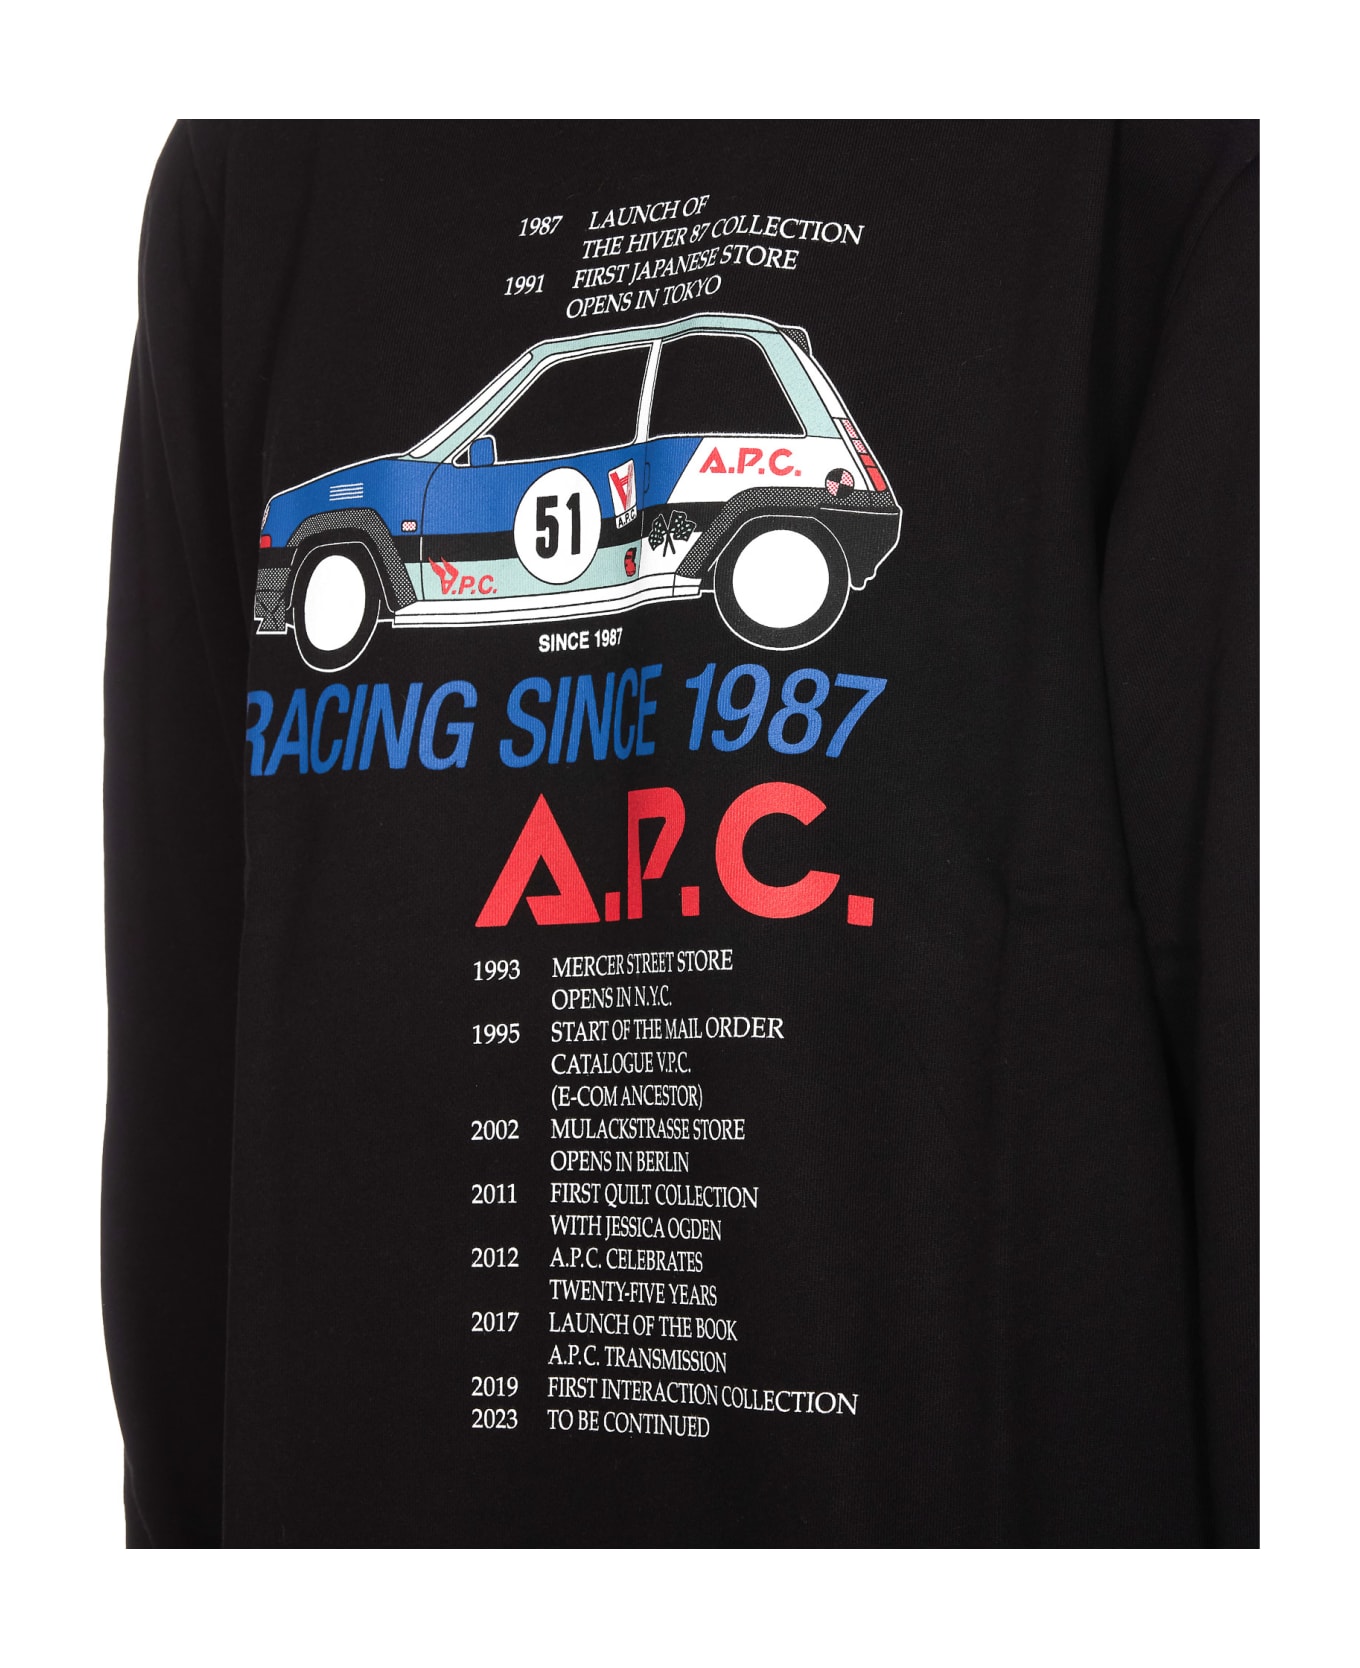 A.P.C. Mack Sweatshirt - BLACK